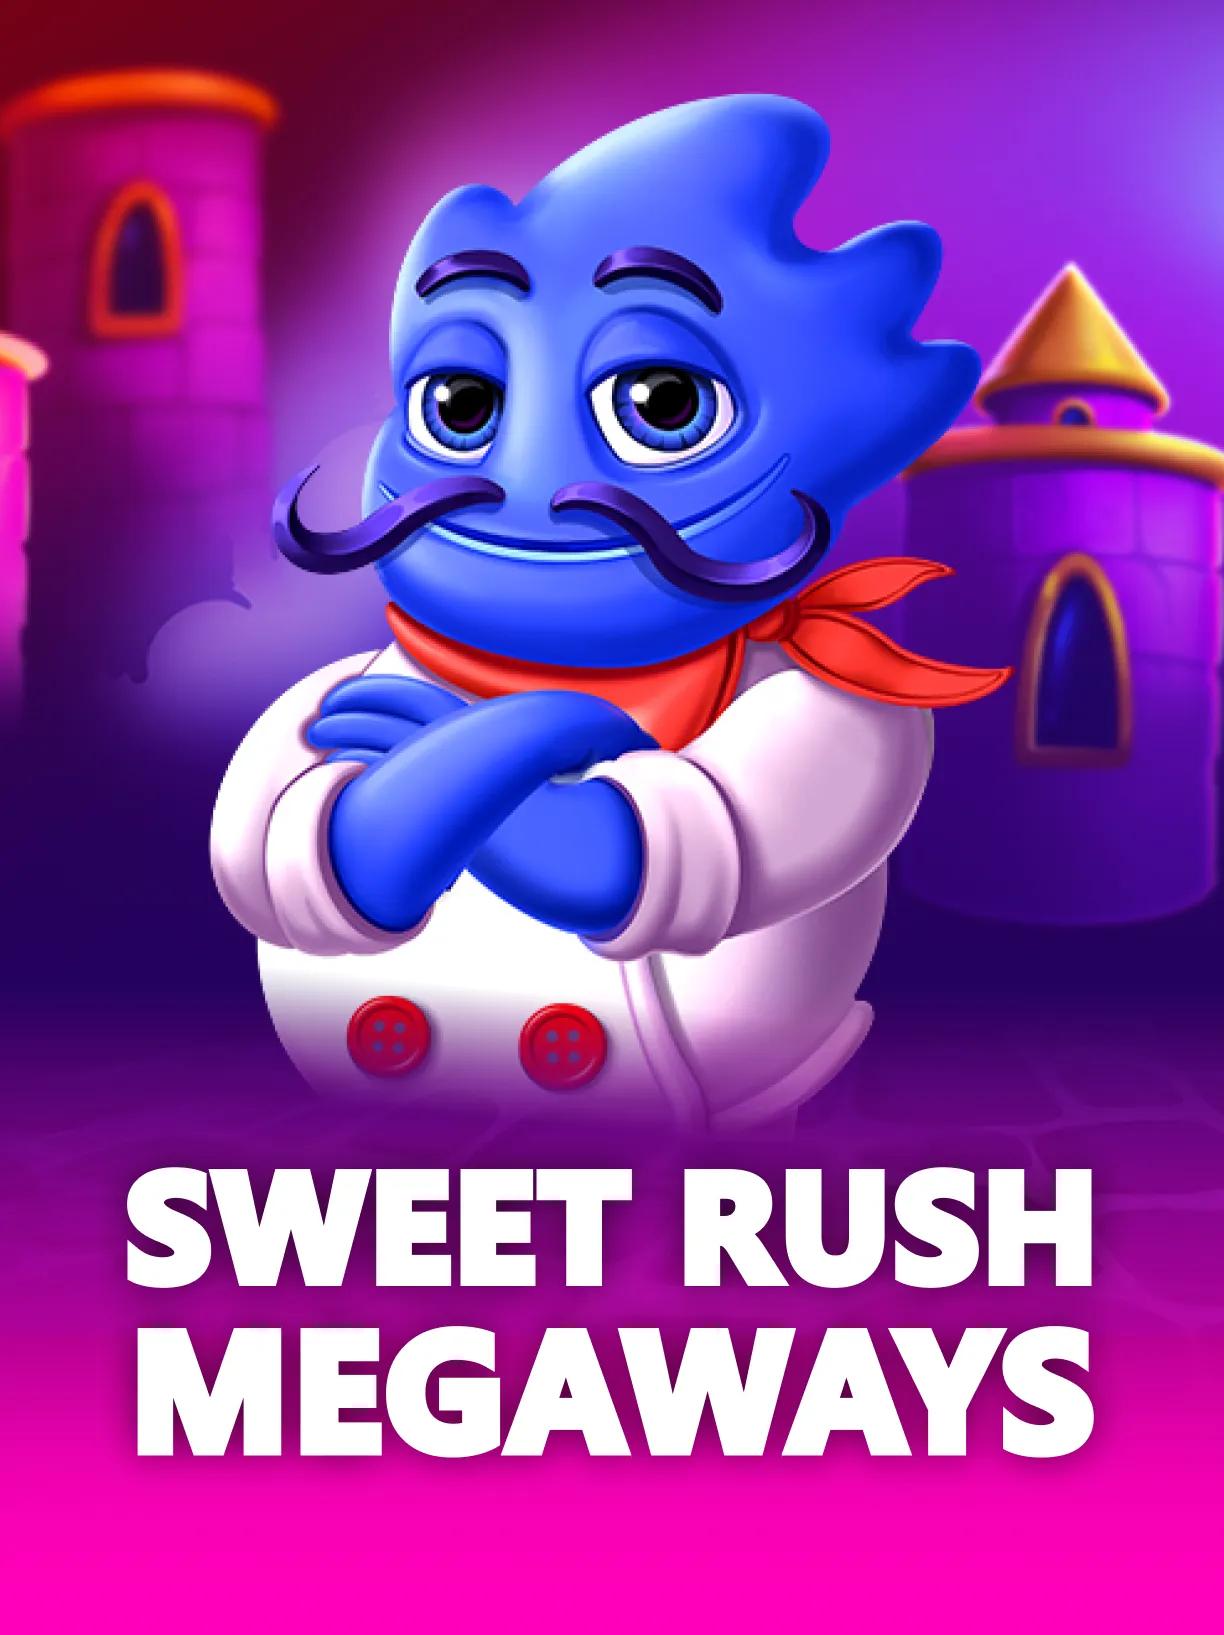 Sweet_Rush_Megaways_square.webp